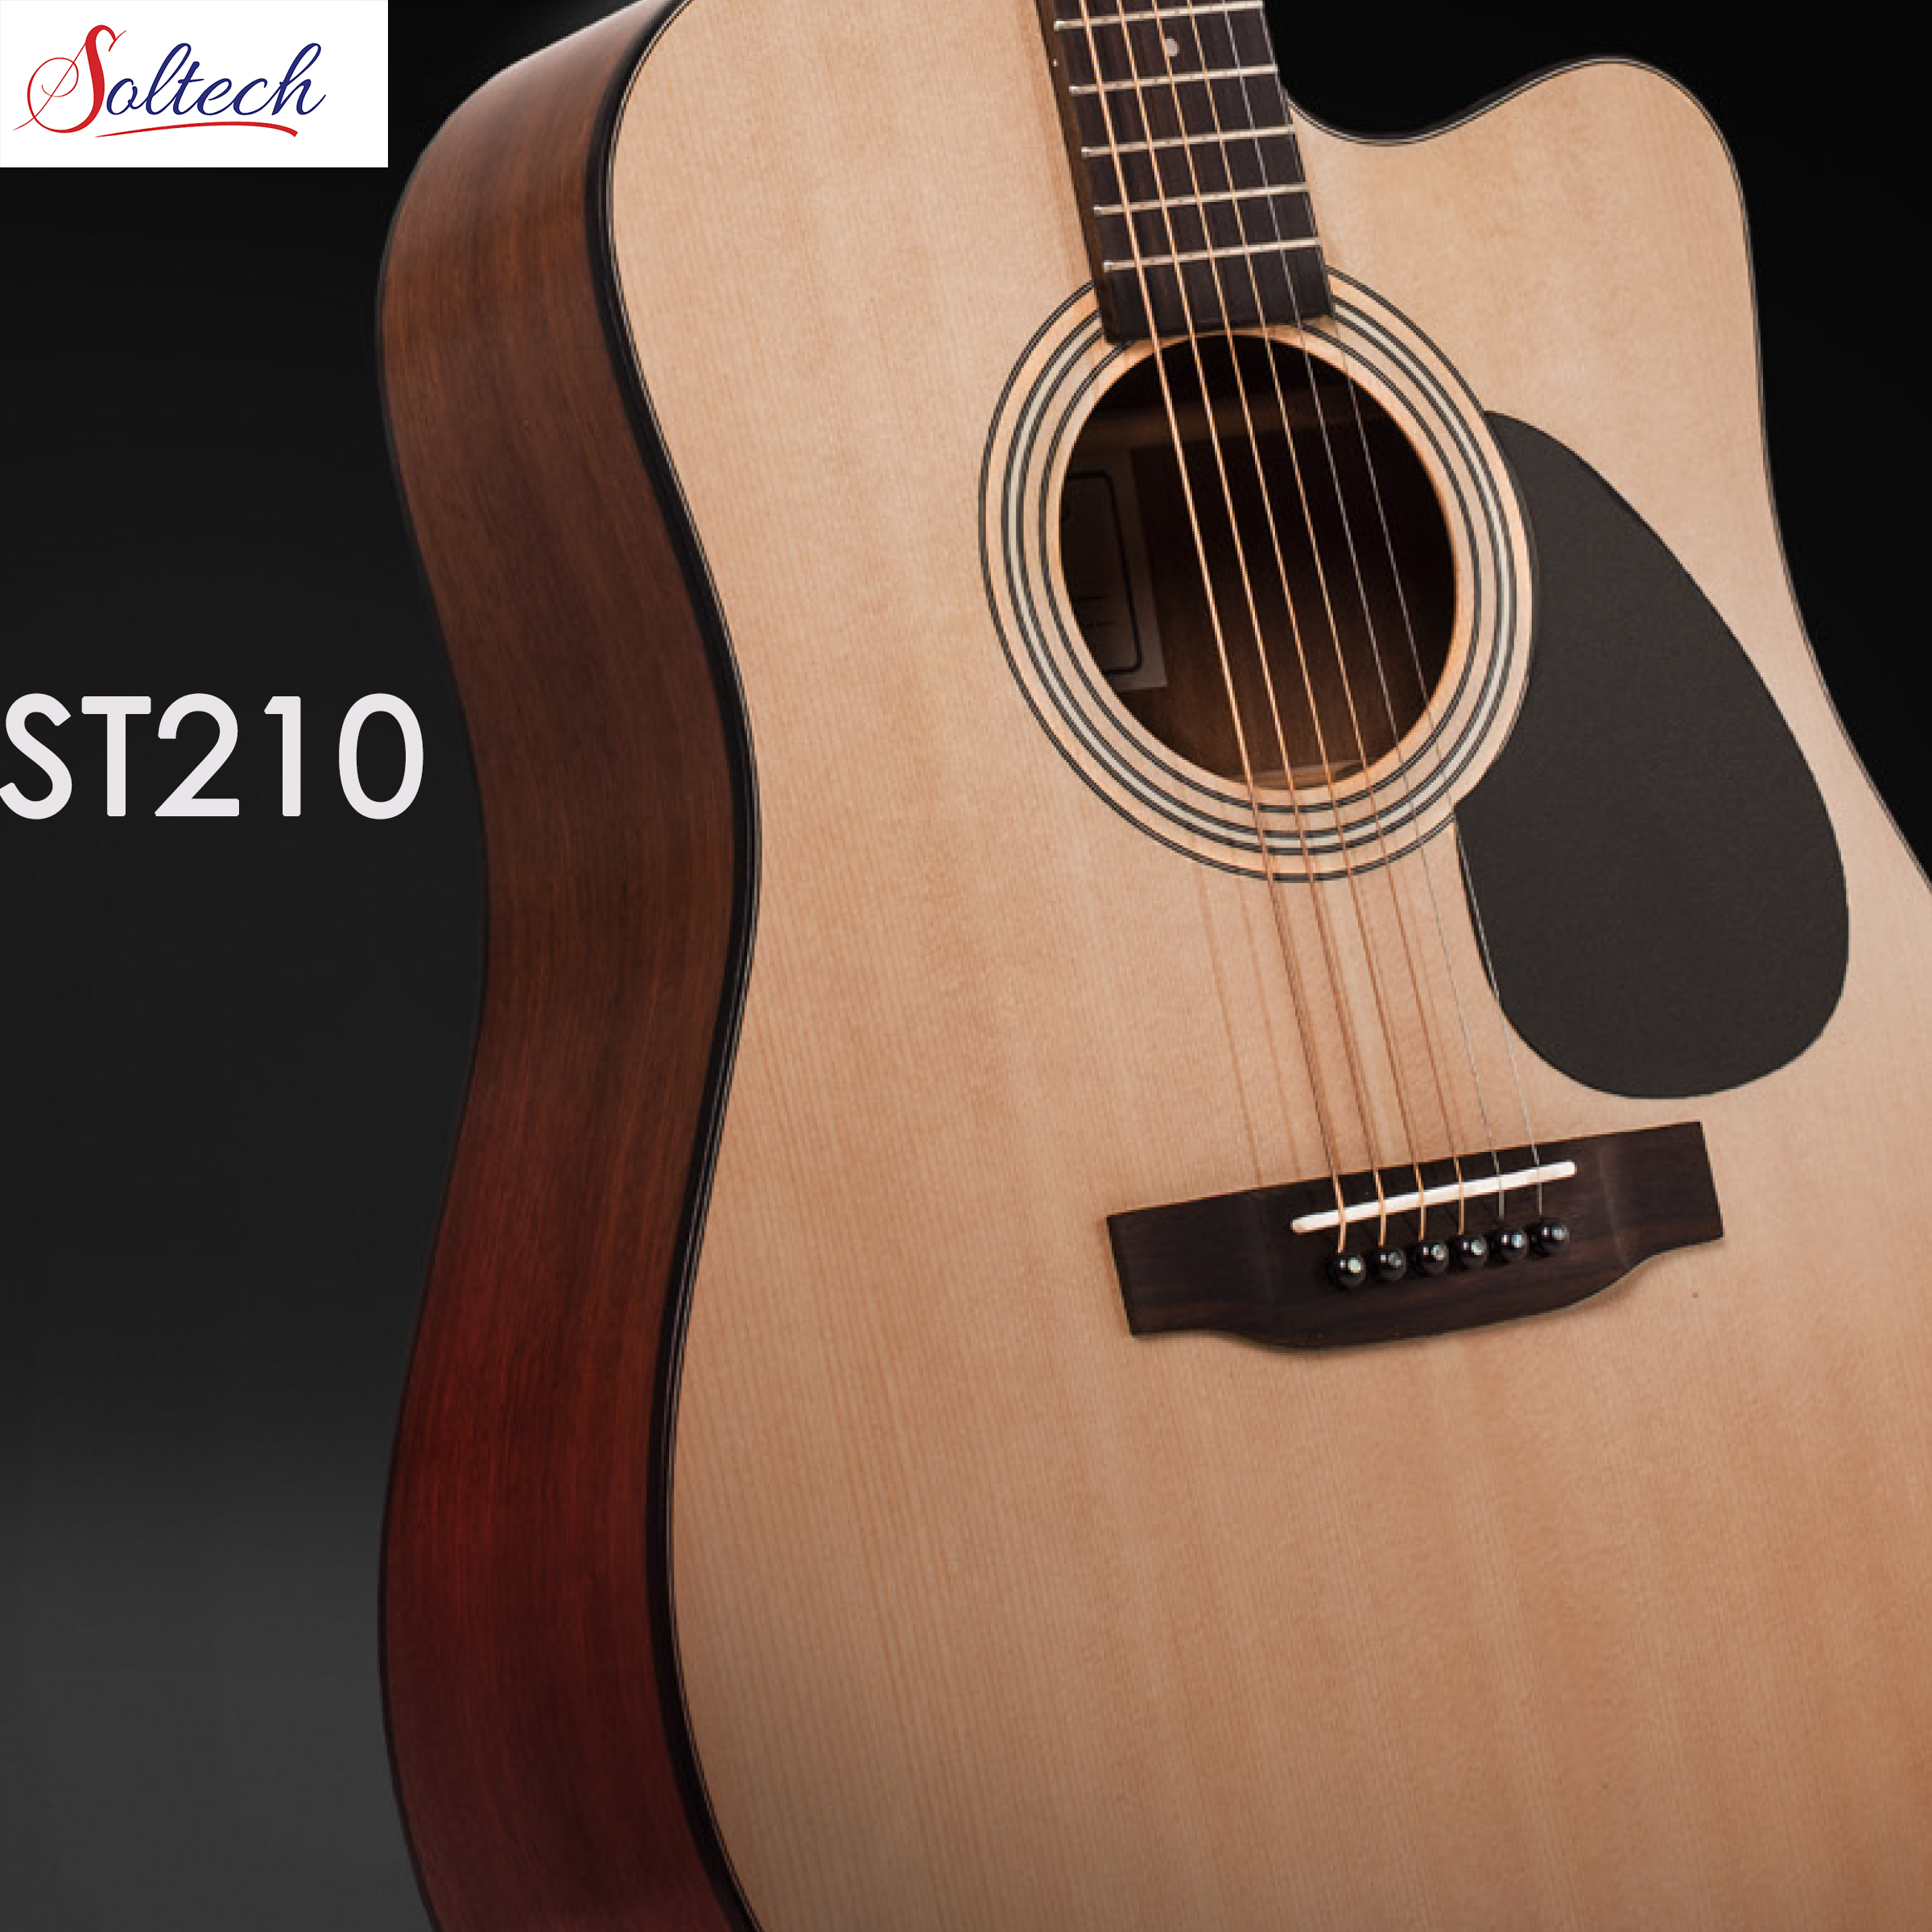 ST210 Acoustic Guitar with Sapele wood back - Guizhou Soltech 